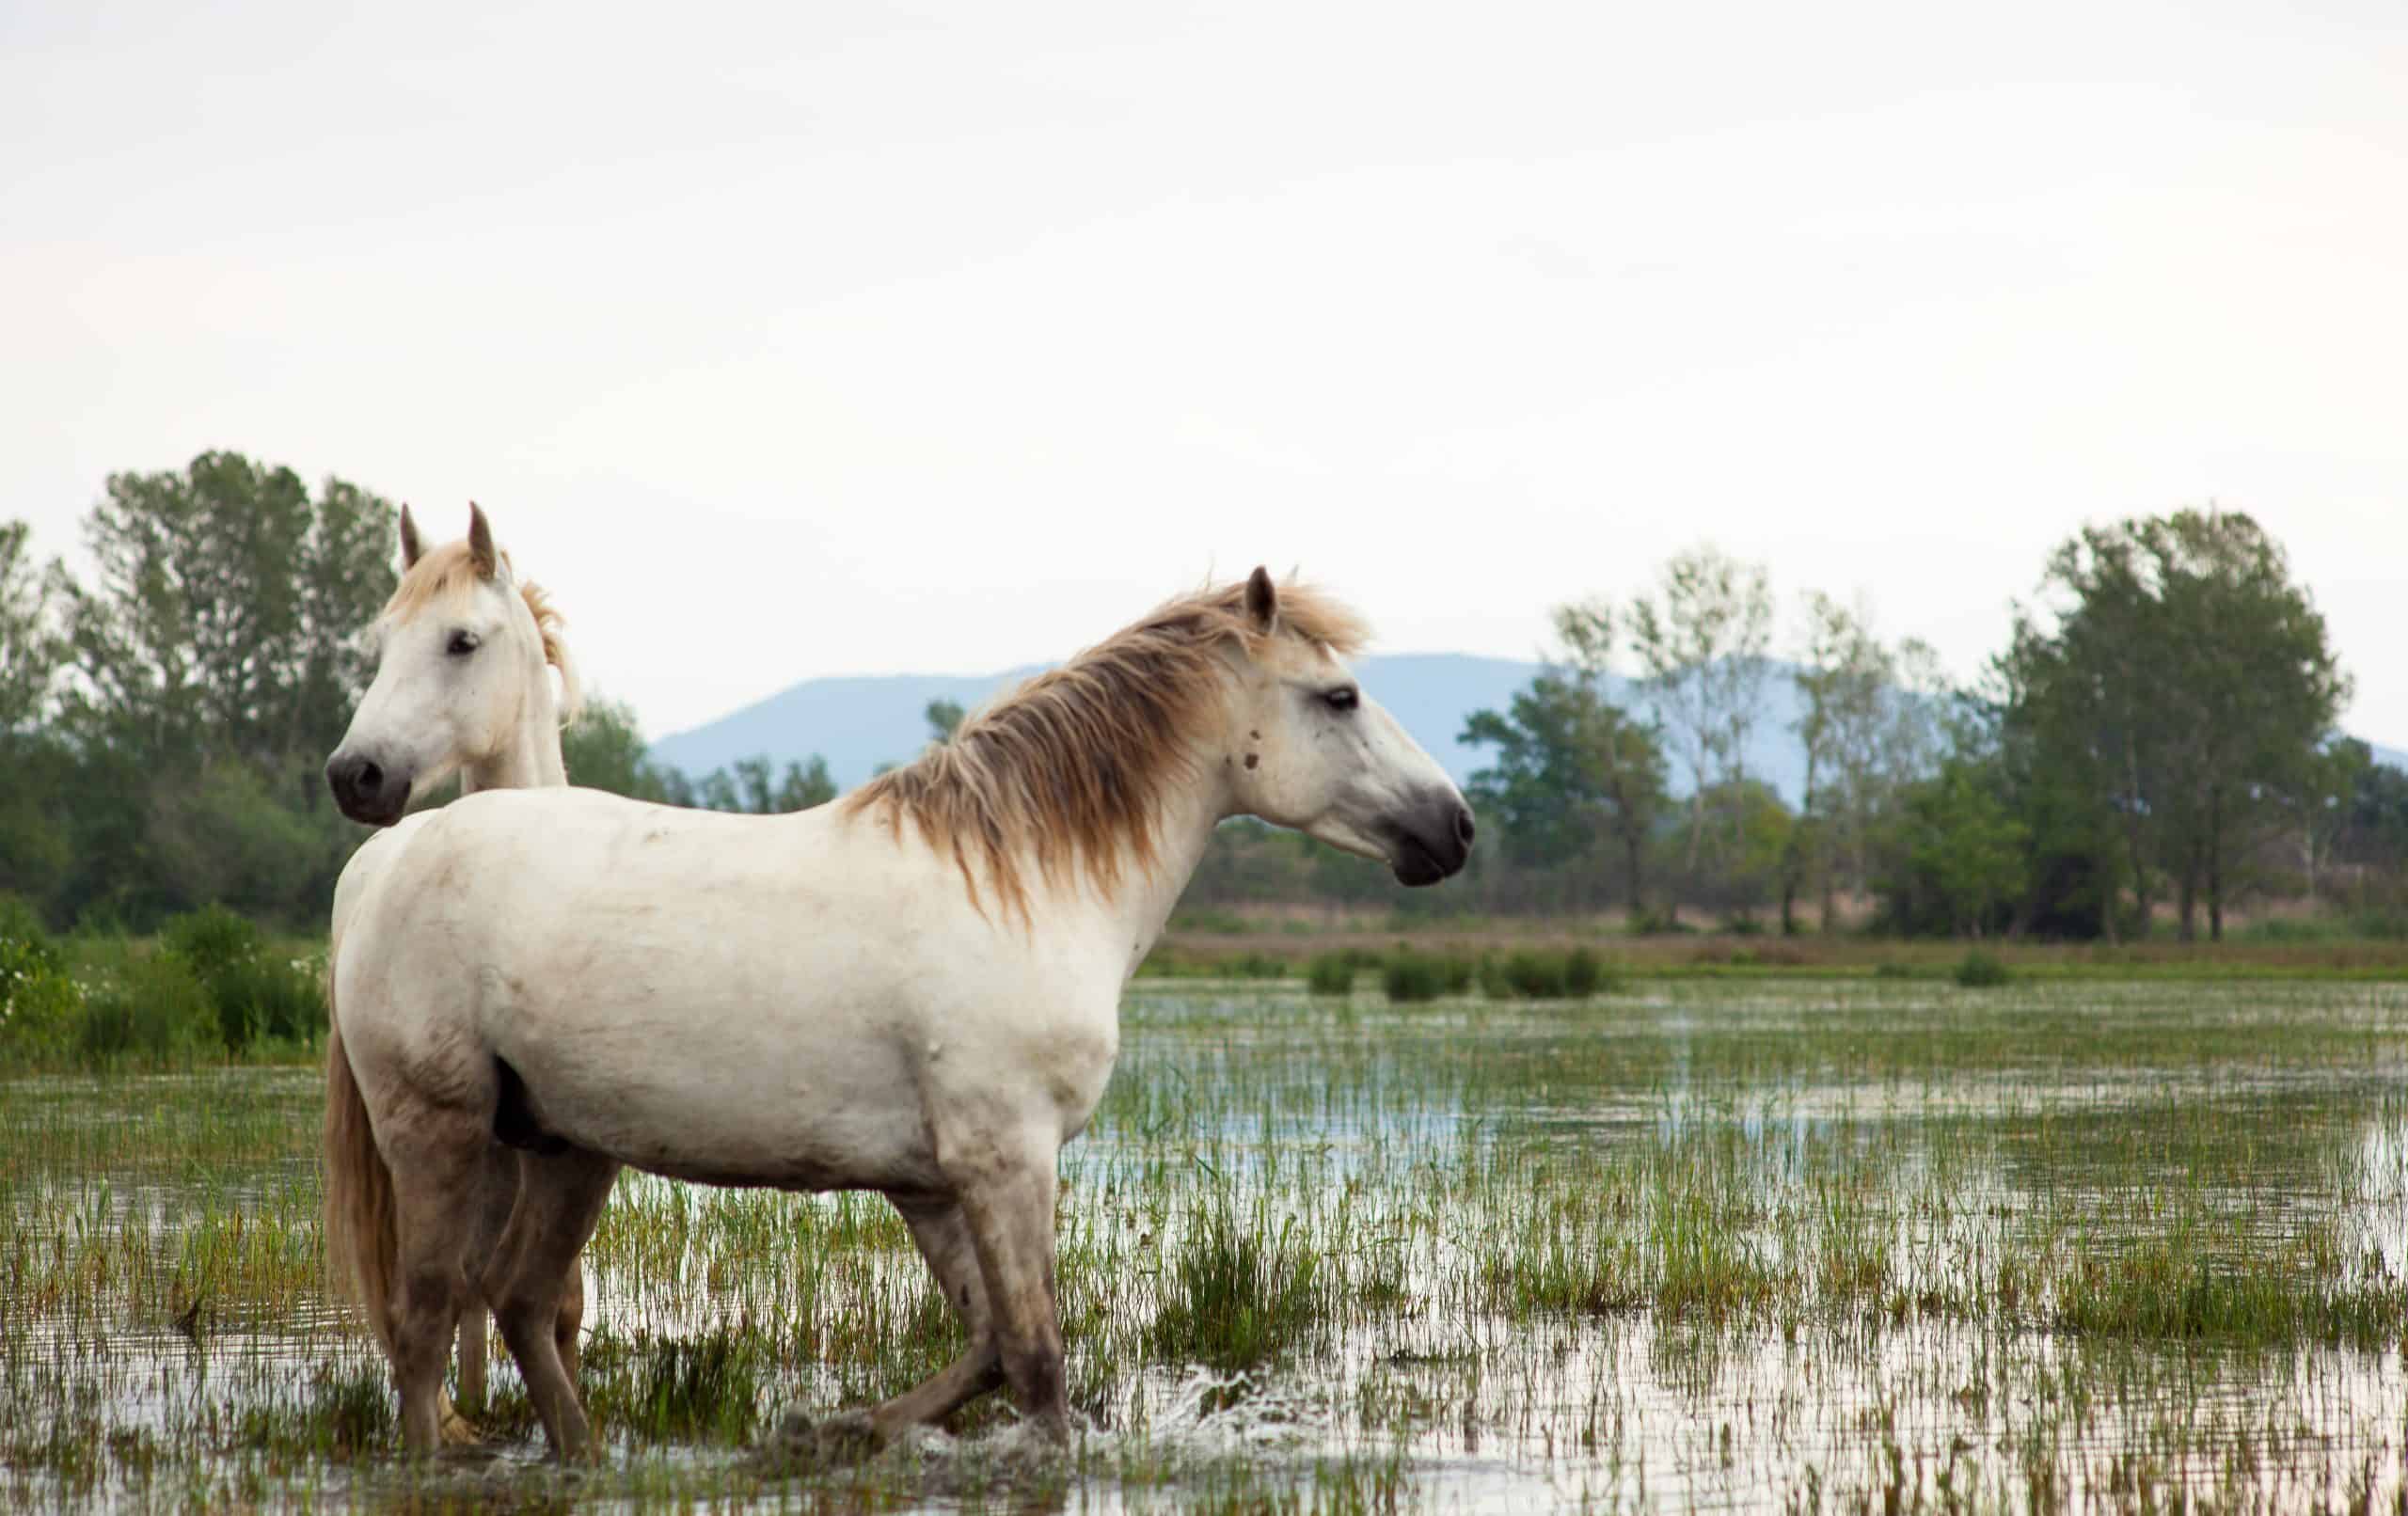 Camargue horses in a swamp - Isola della cona